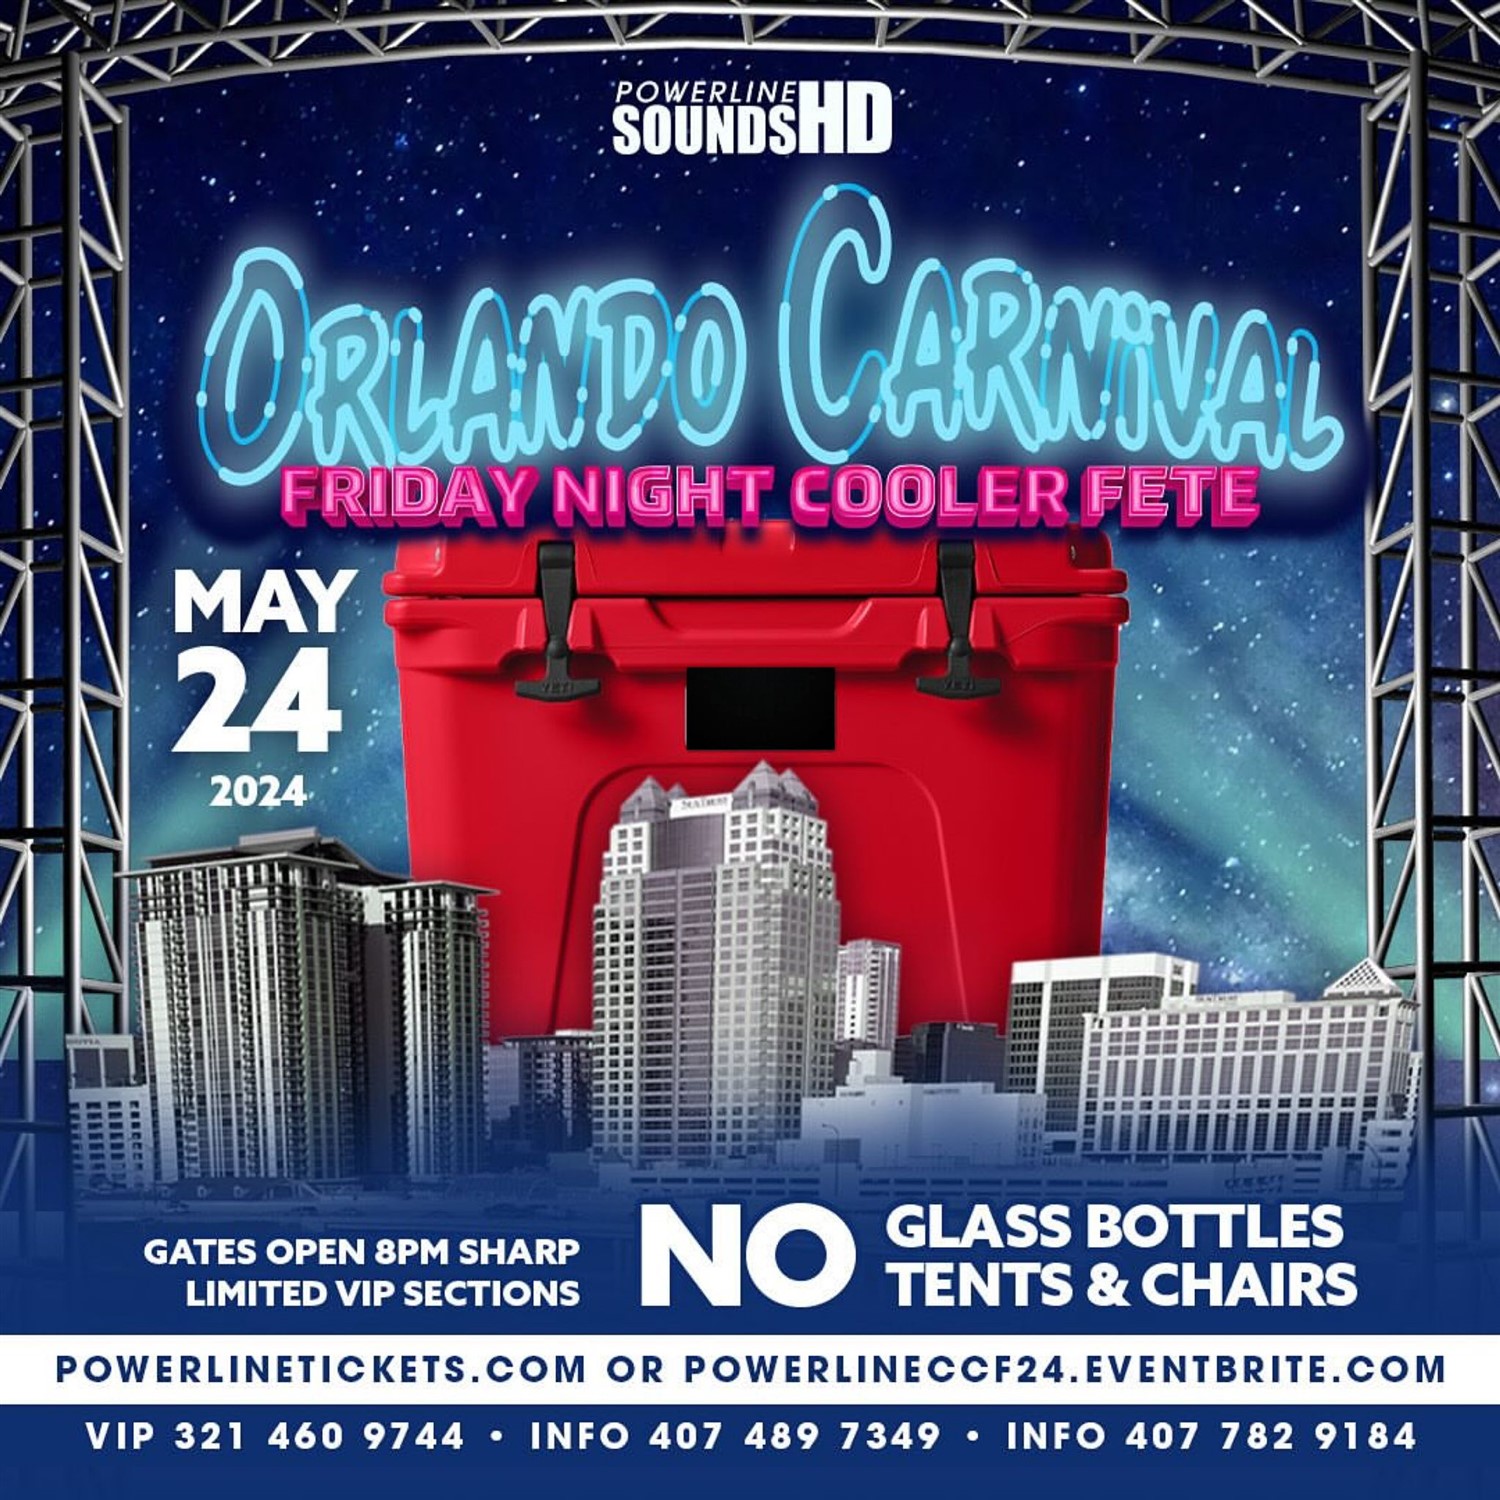 POWERLINE'S 2024 Annual      Orlando Carnival Cooler Fete!! NO GLASS BOTTLES / Gates open @ 8pm / Fete starts @ 9pm on may. 24, 20:00@Xperience Live - Compra entradas y obtén información enPowerline Sounds HD powerlinetickets.com